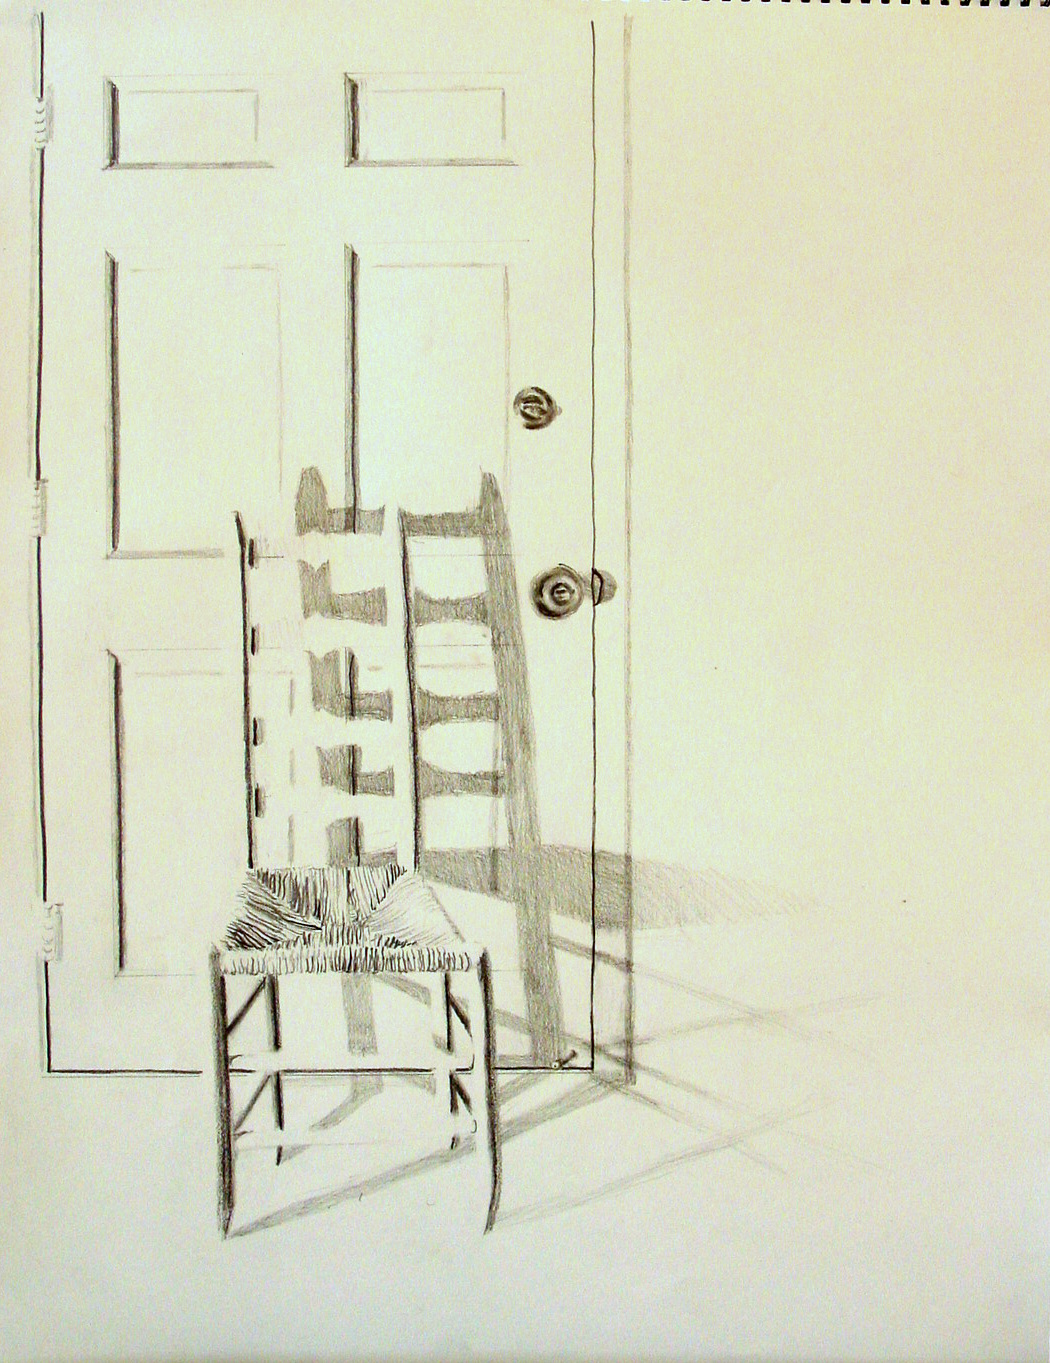 chair-and-door-still-life-pencil-18x24-jessica-siemens-2009